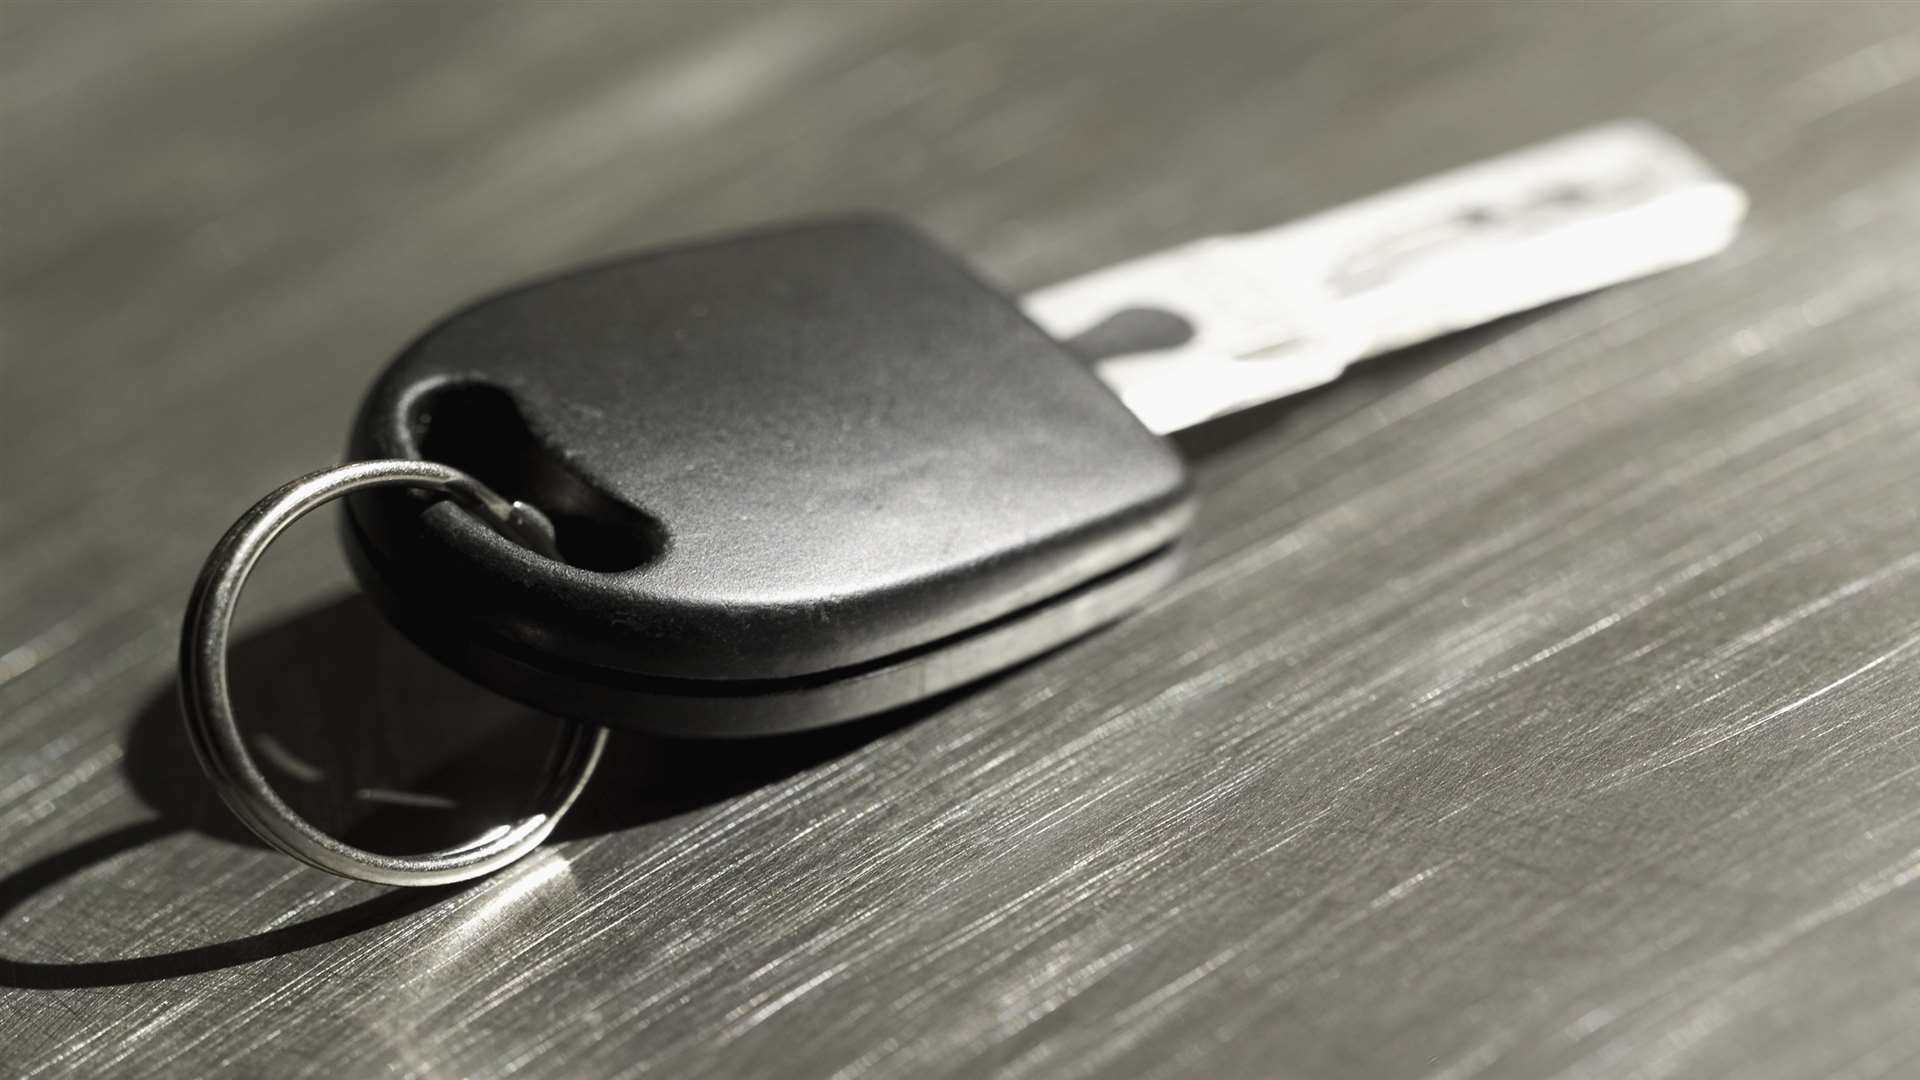 A car key was stolen, but not the car